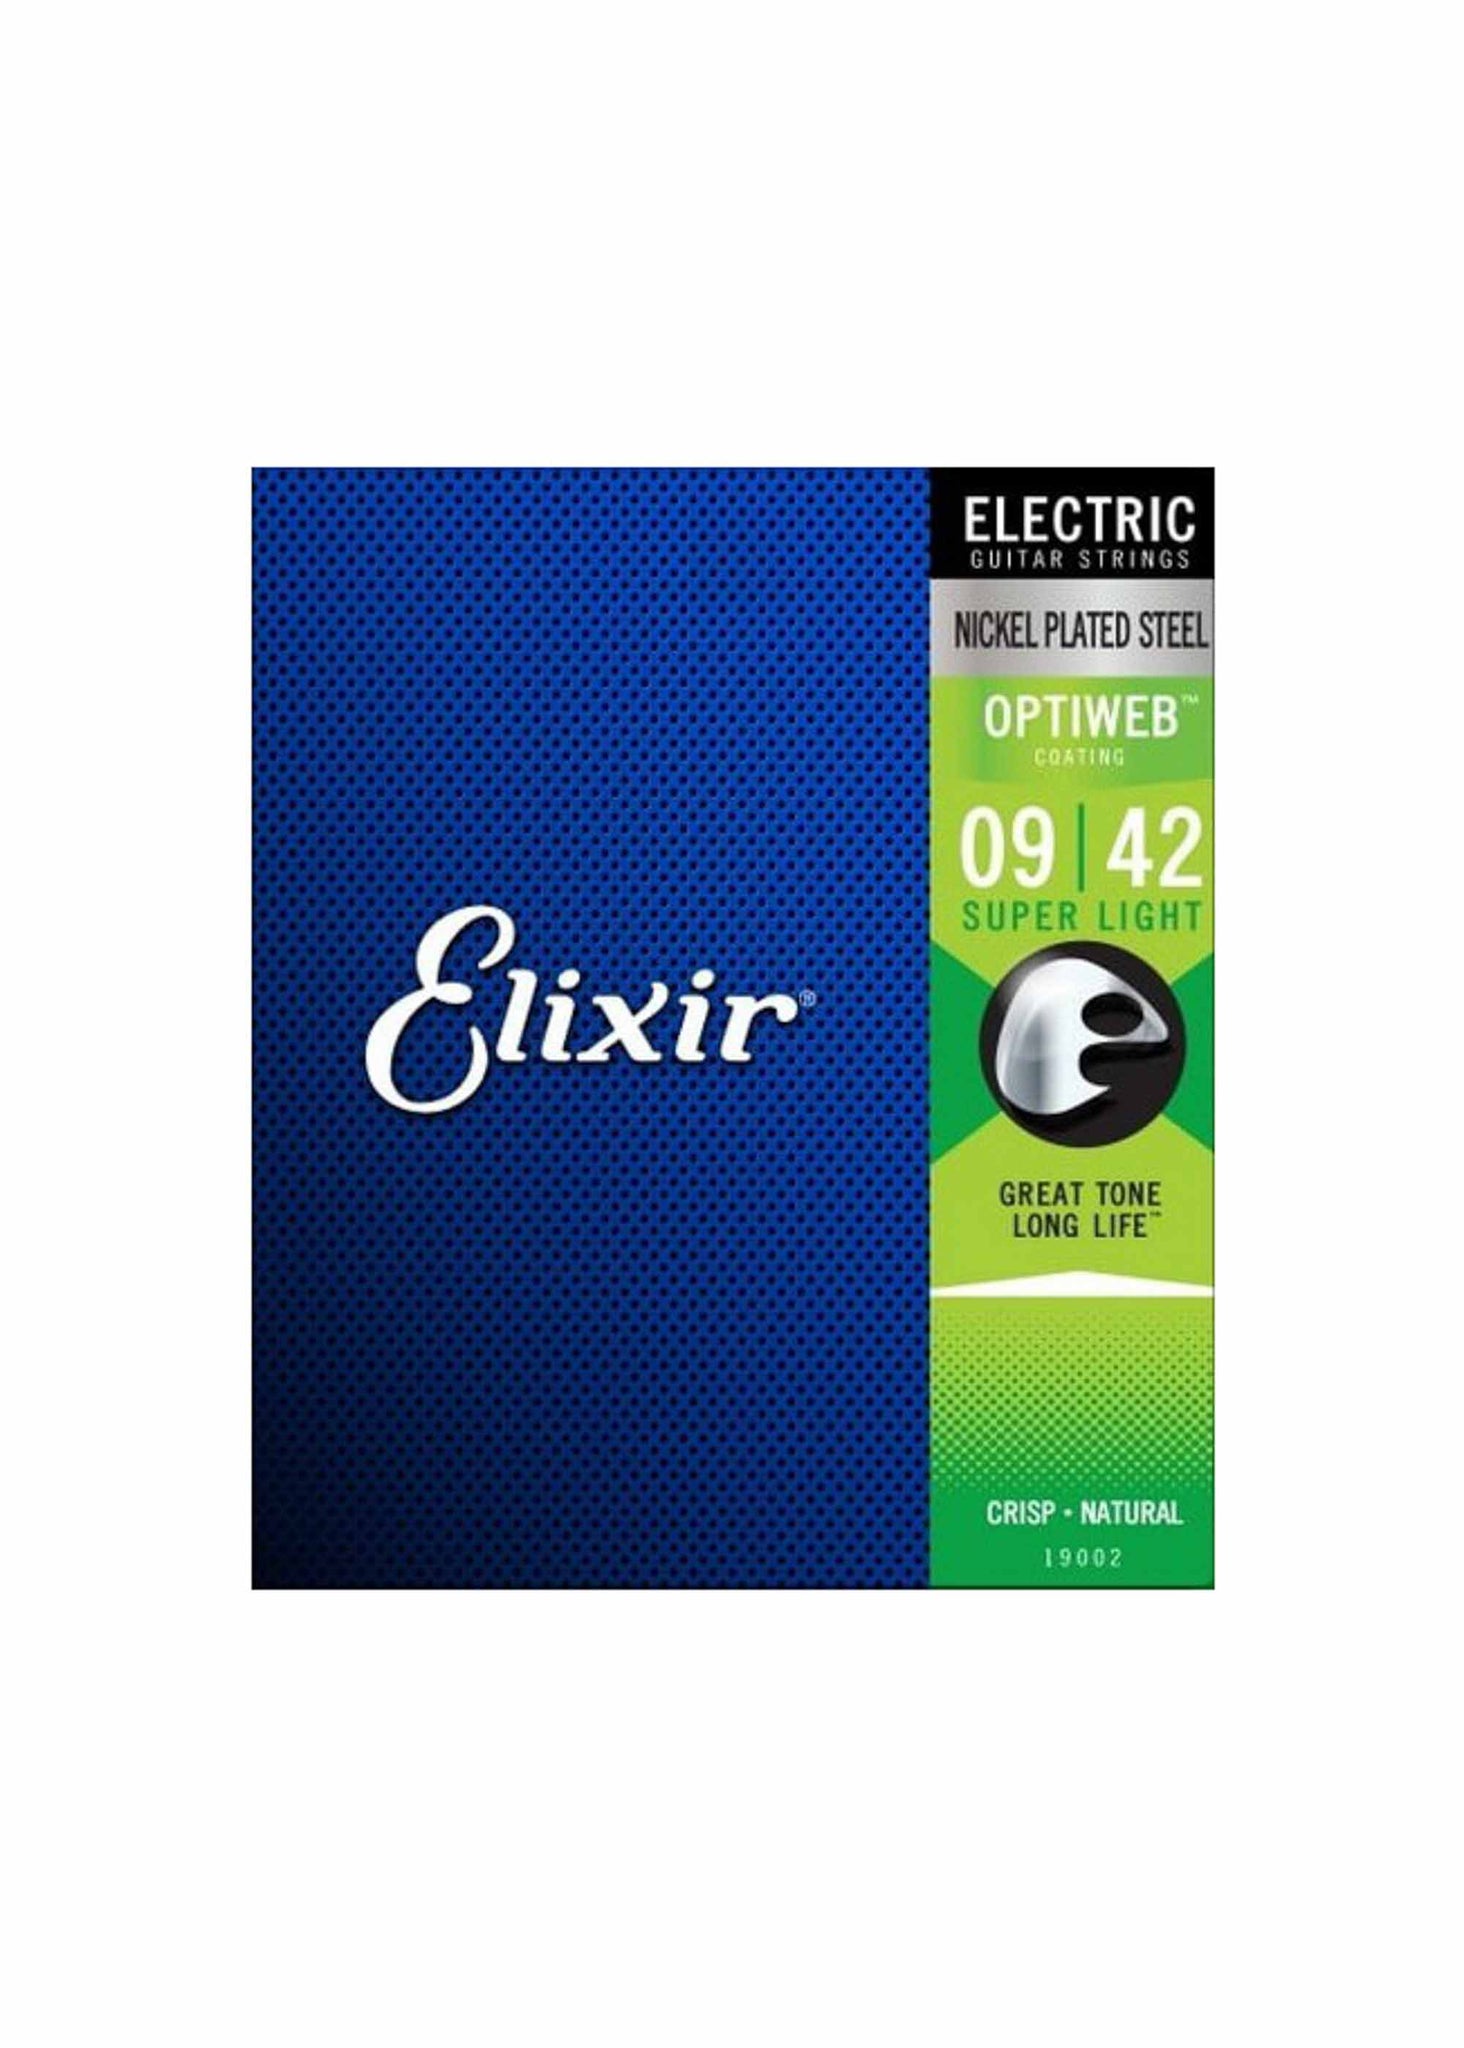 Elixir Optiweb Electric Guitar Strings, Super Light, 09-42